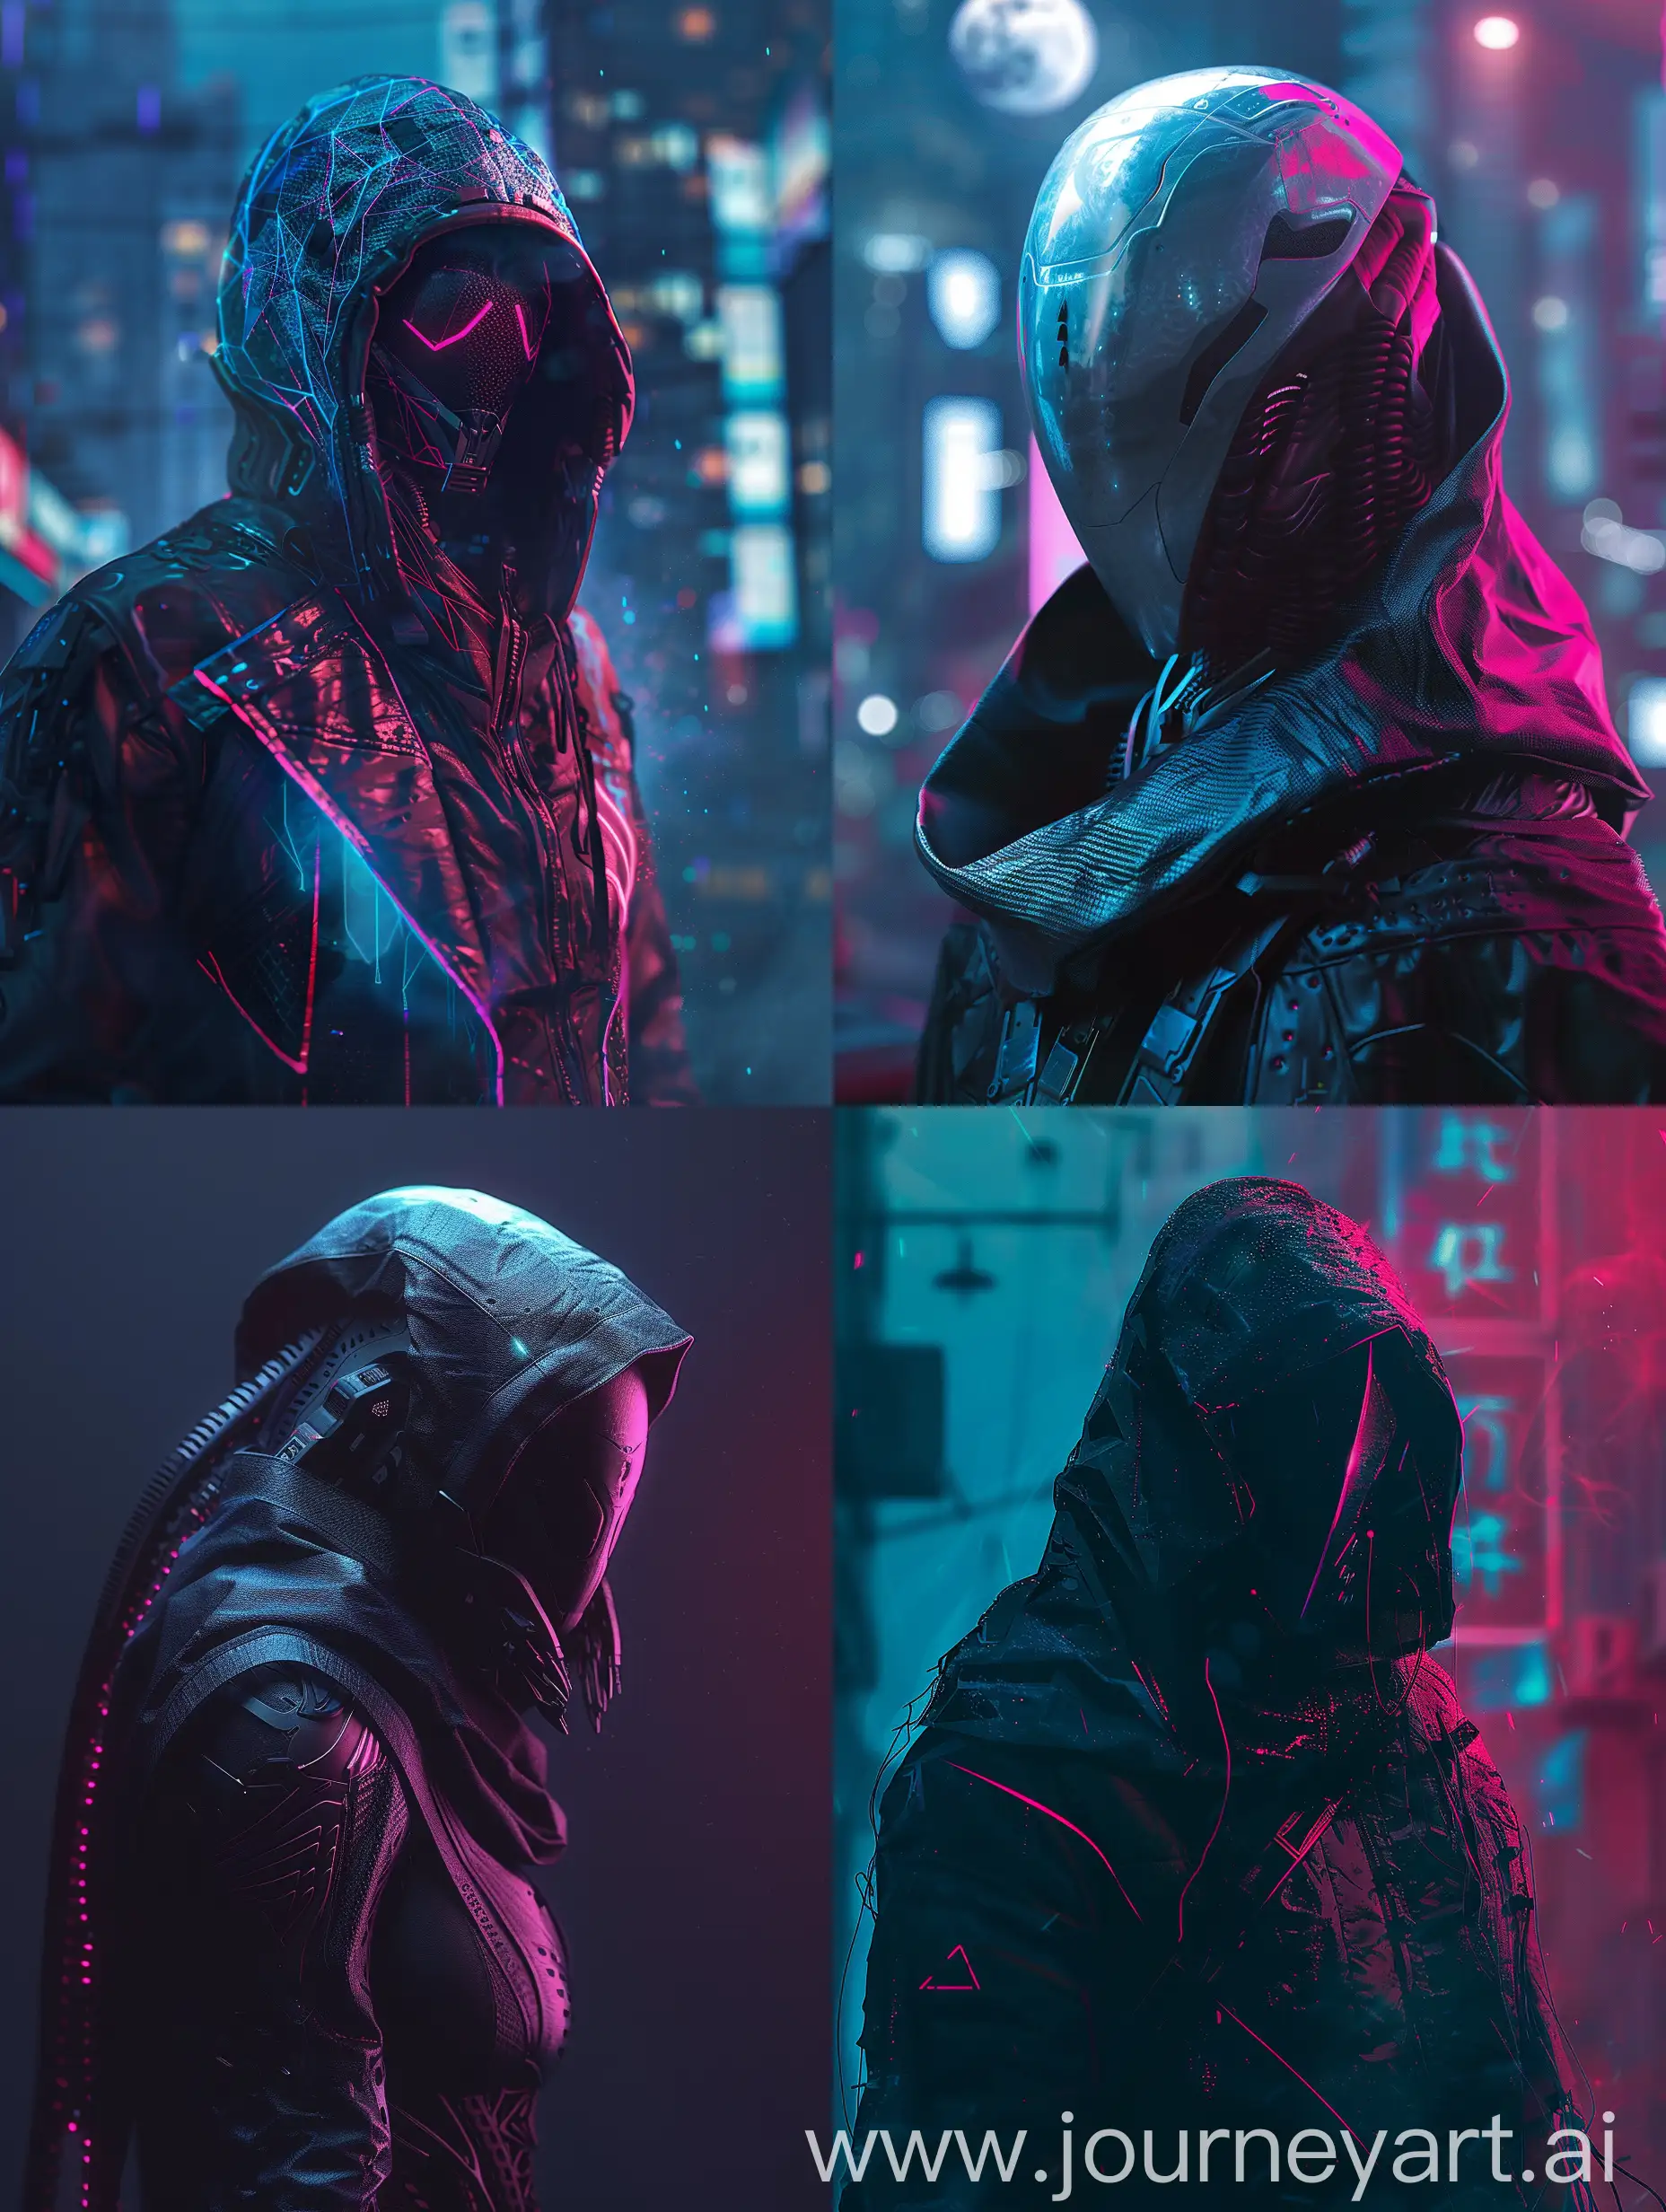 Silent Blades, assassin concept, darkness, potrait, realistic, high detailed, cyberpunk concept, with subtle pink and blue gradients, futuristic, xenomorph, cyborg, Moonlight enveloping attire tech-punk mech-punk cityscape.